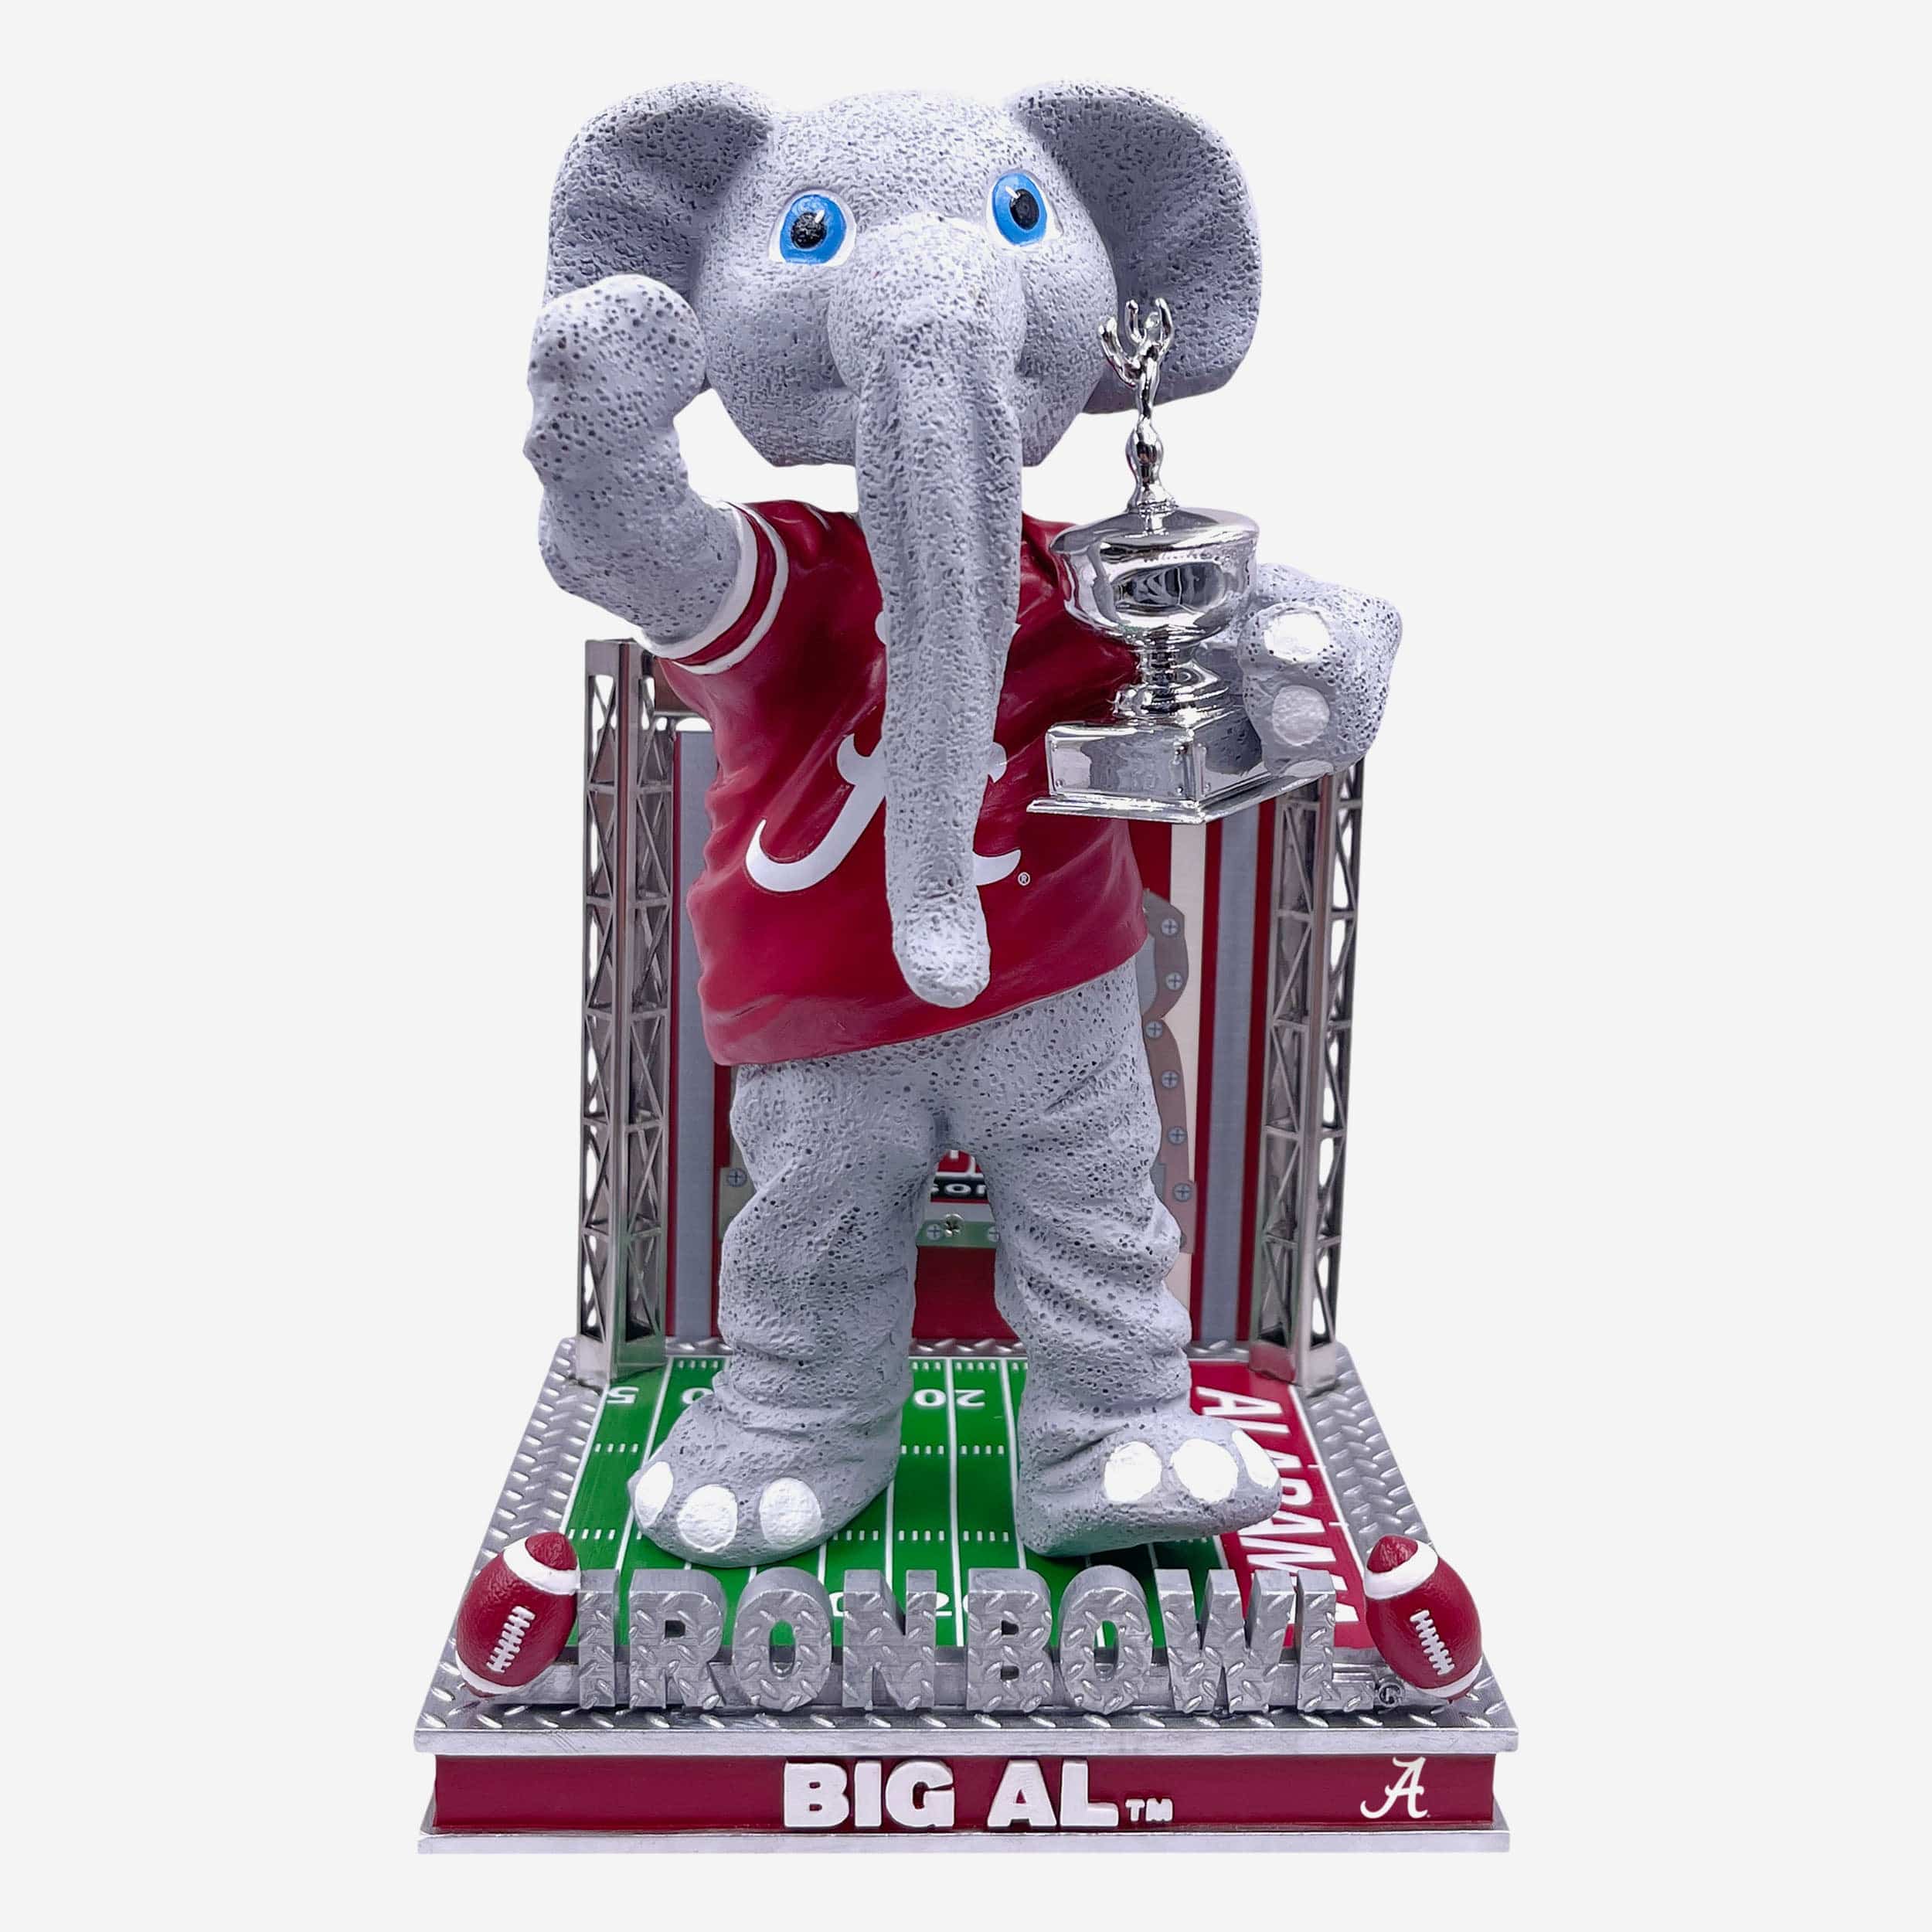 The story behind Alabama's elephant mascot